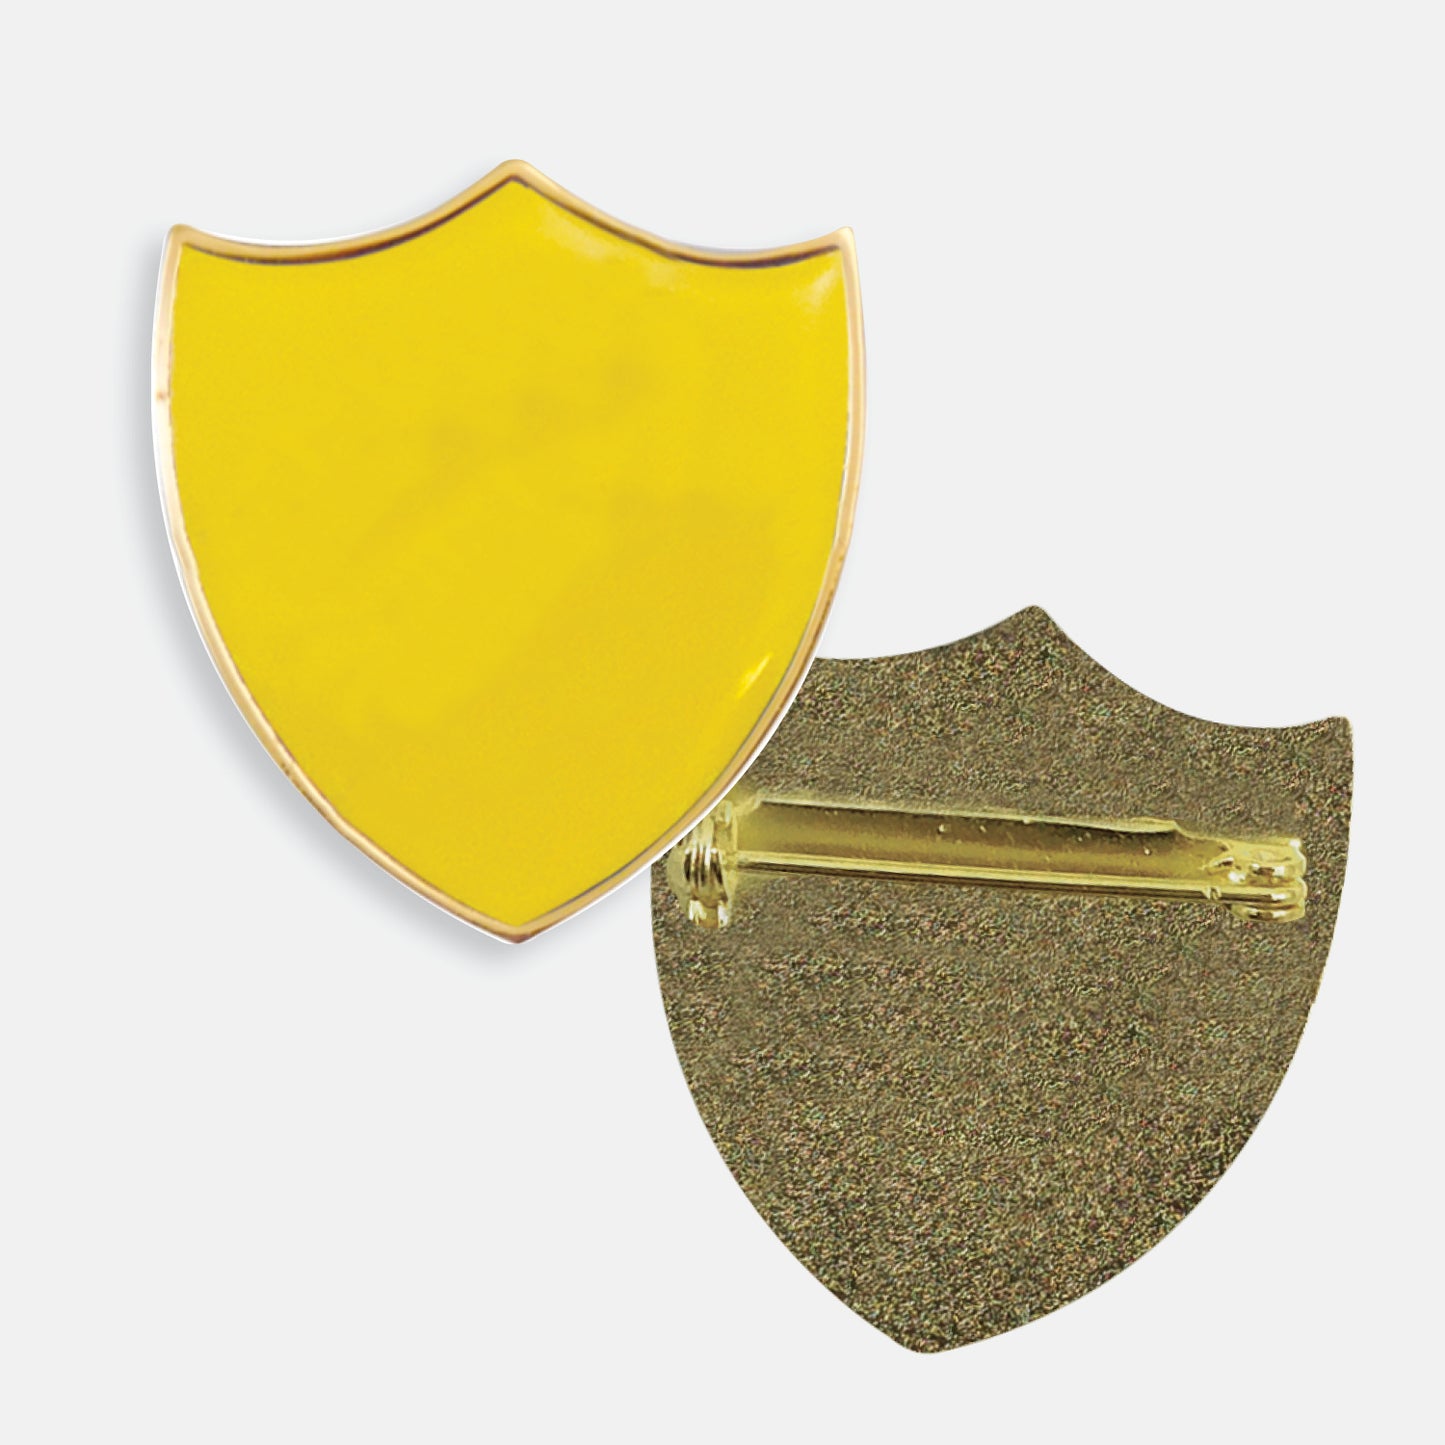 Enamel Shield Badge